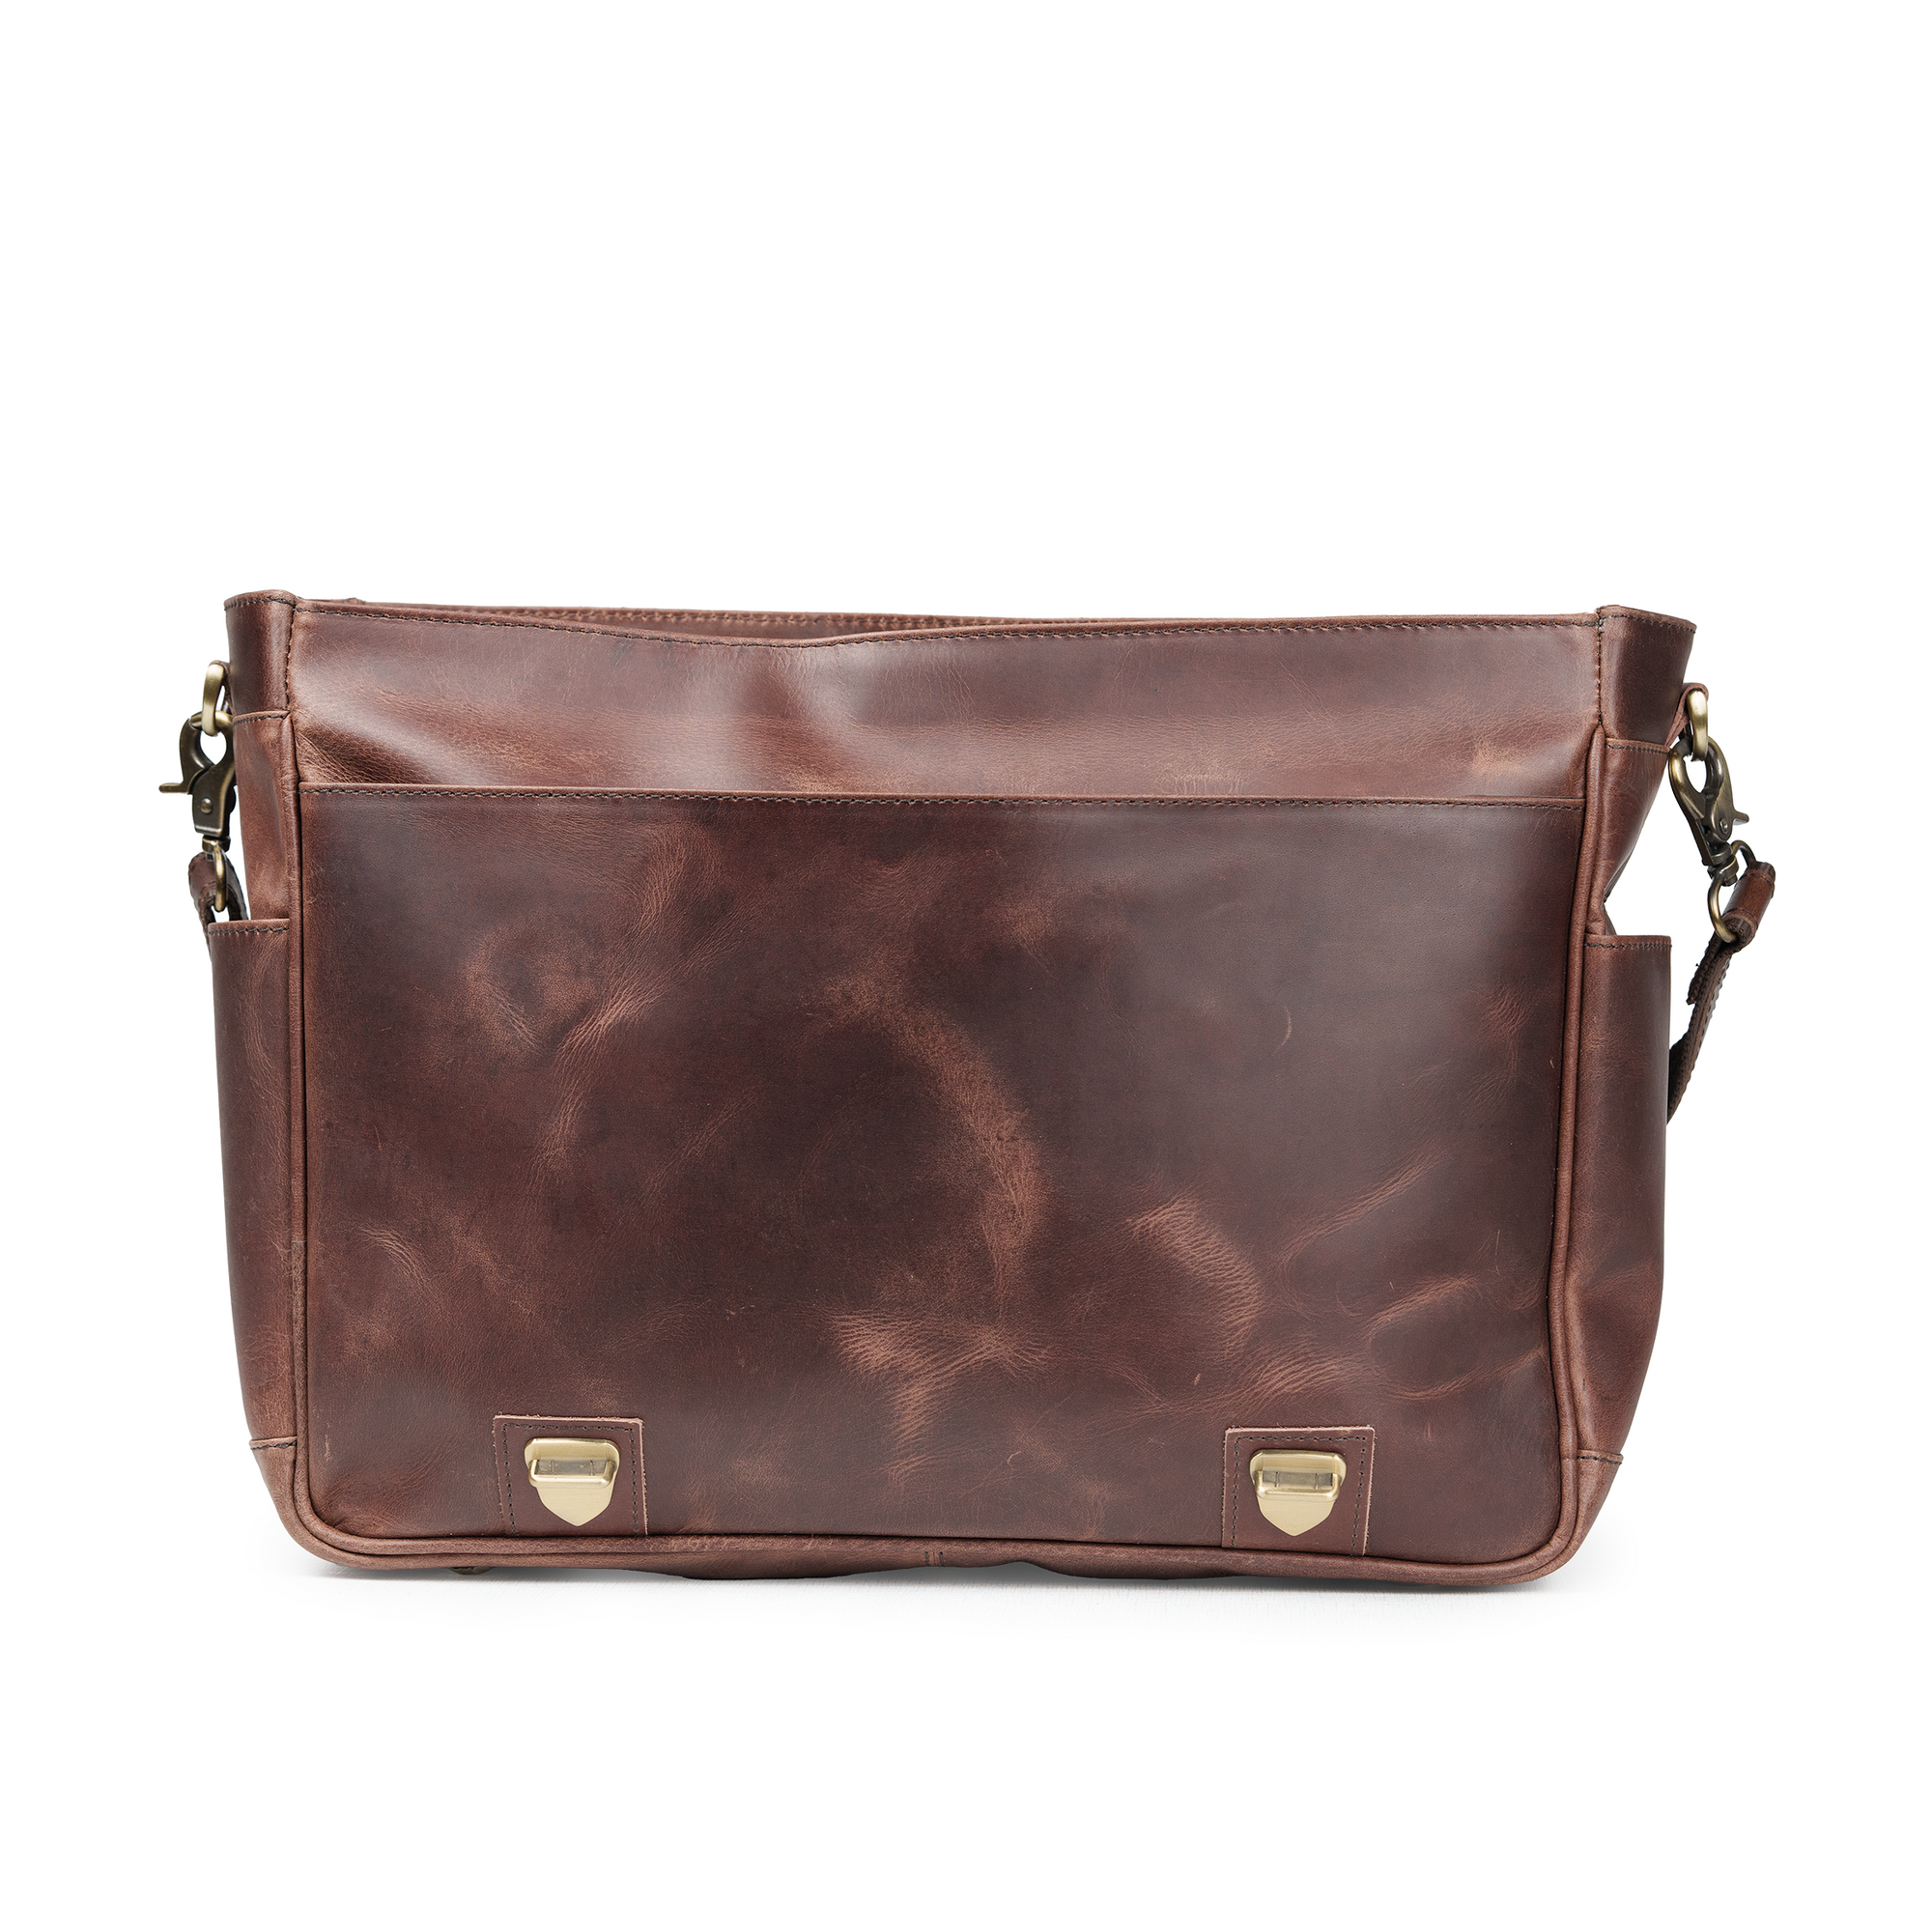 The “Lewis” Buffalo Leather Messenger Bag